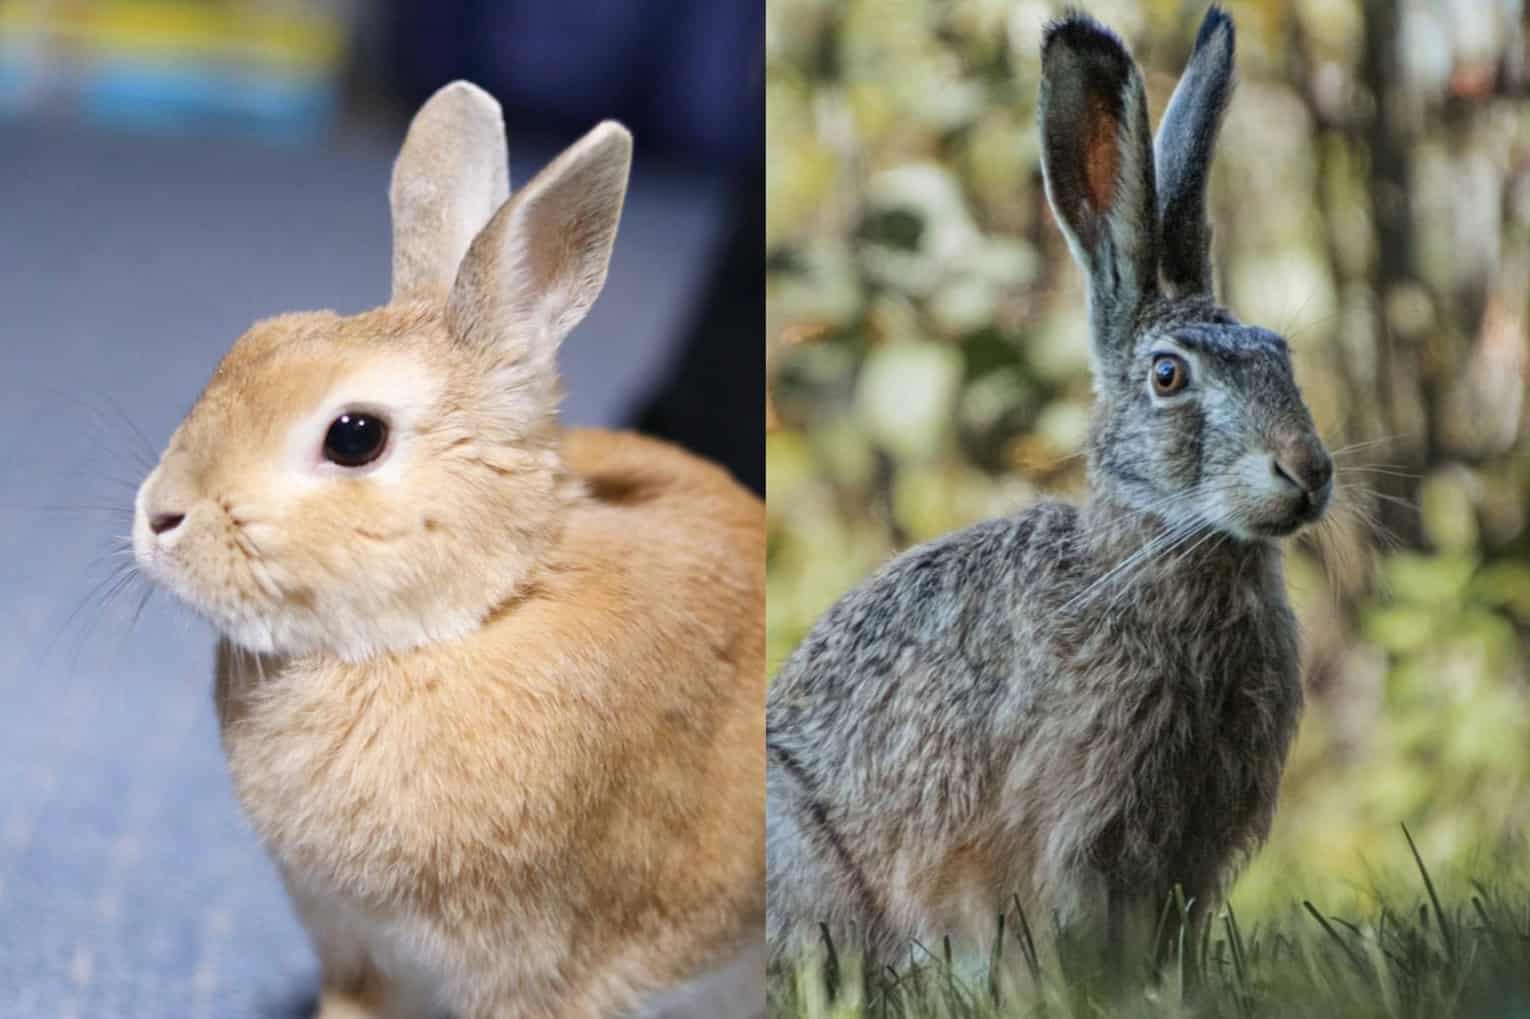 Rabbit vs Hare